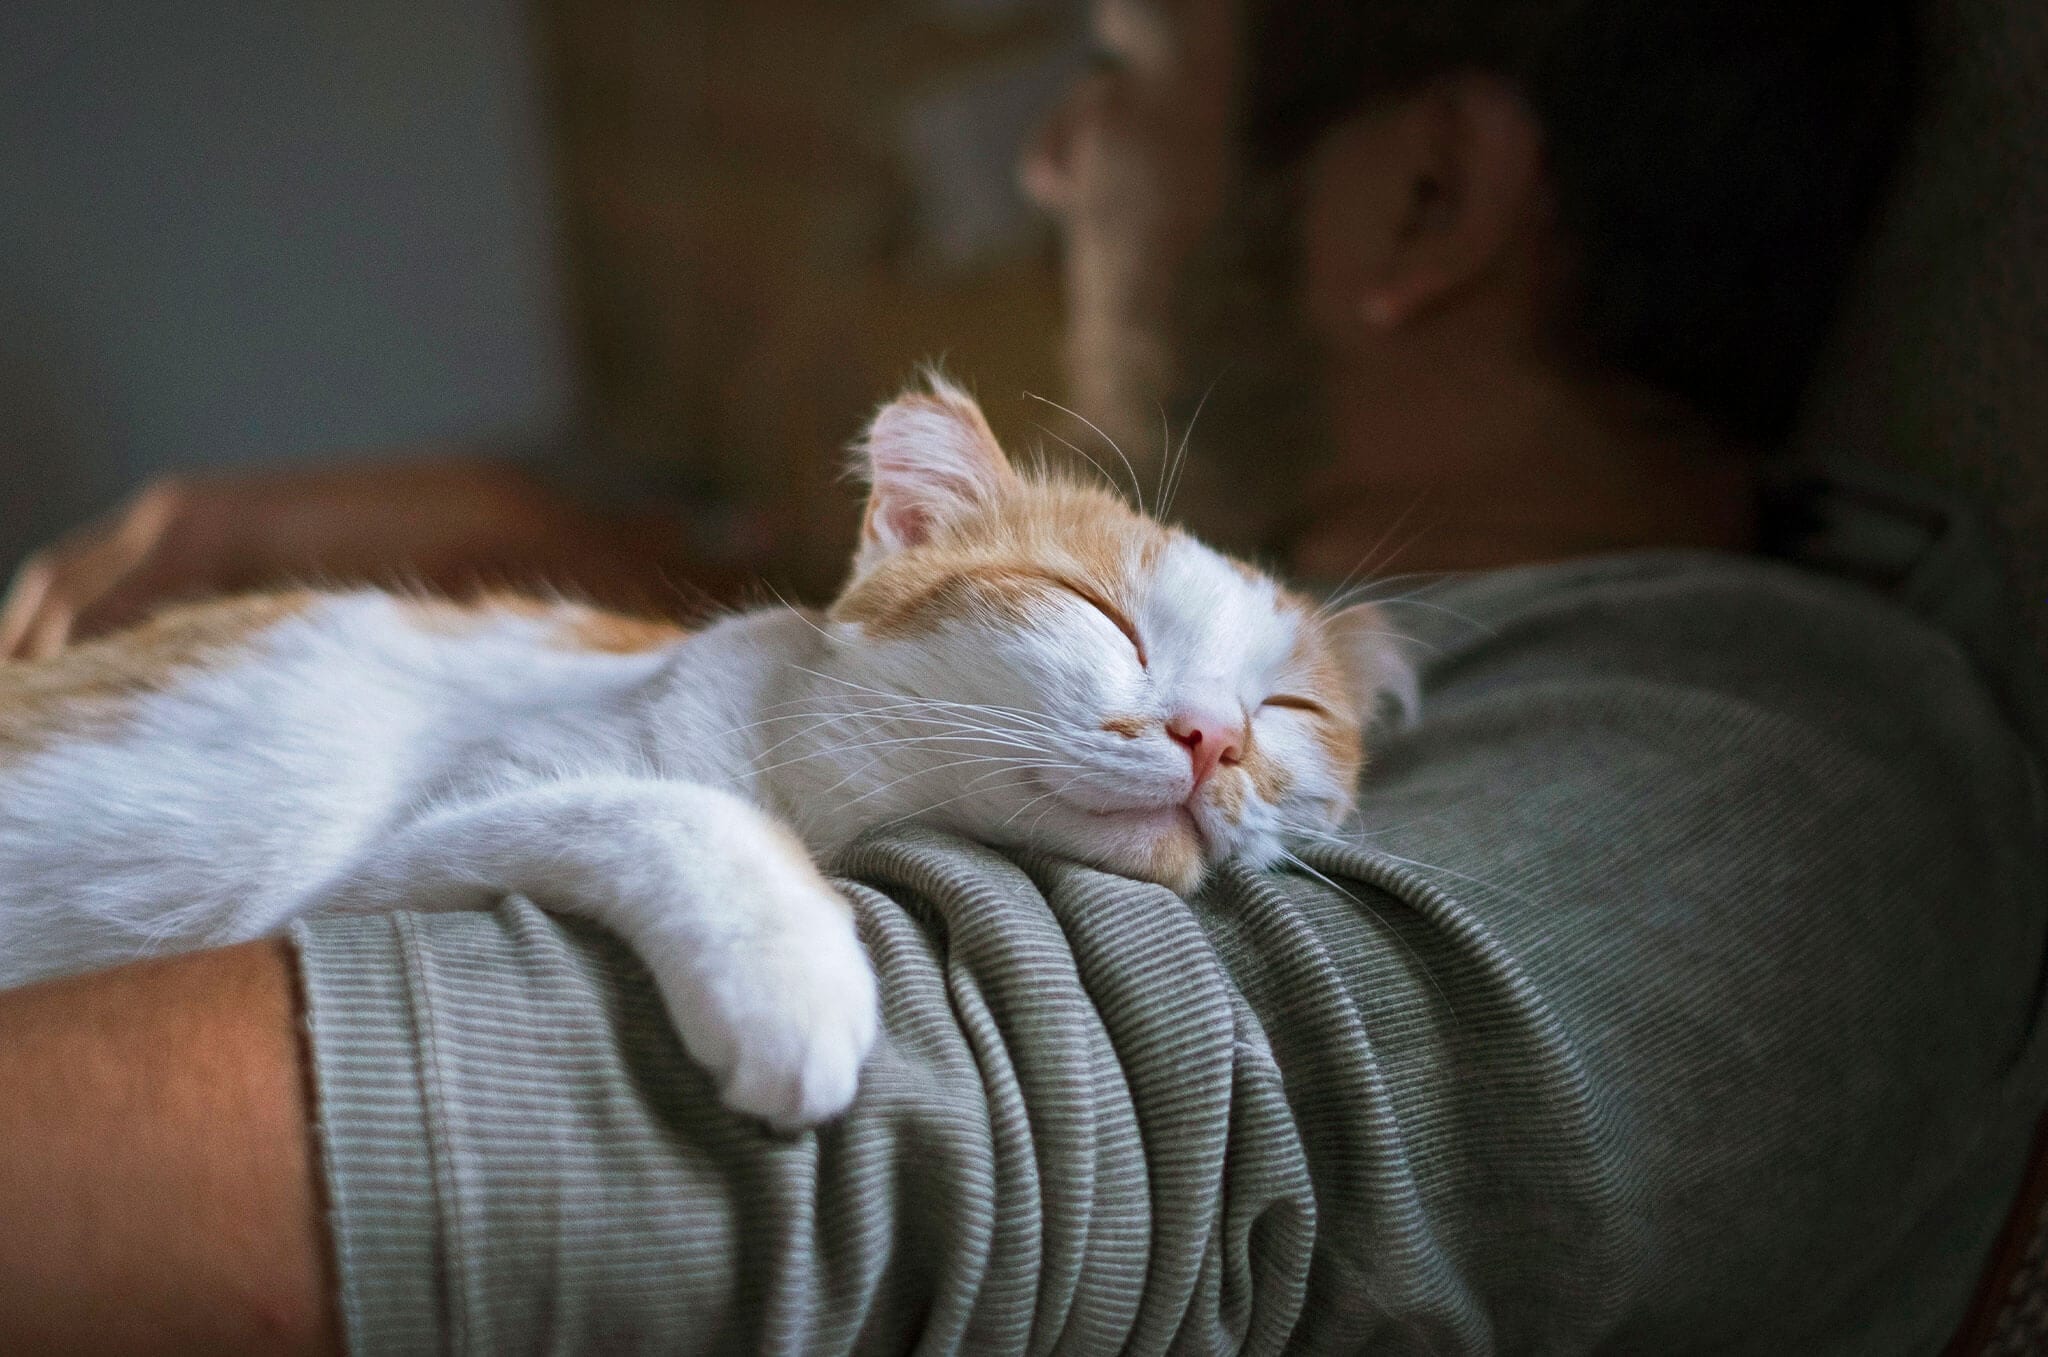 a cat sleeping on a man's arm